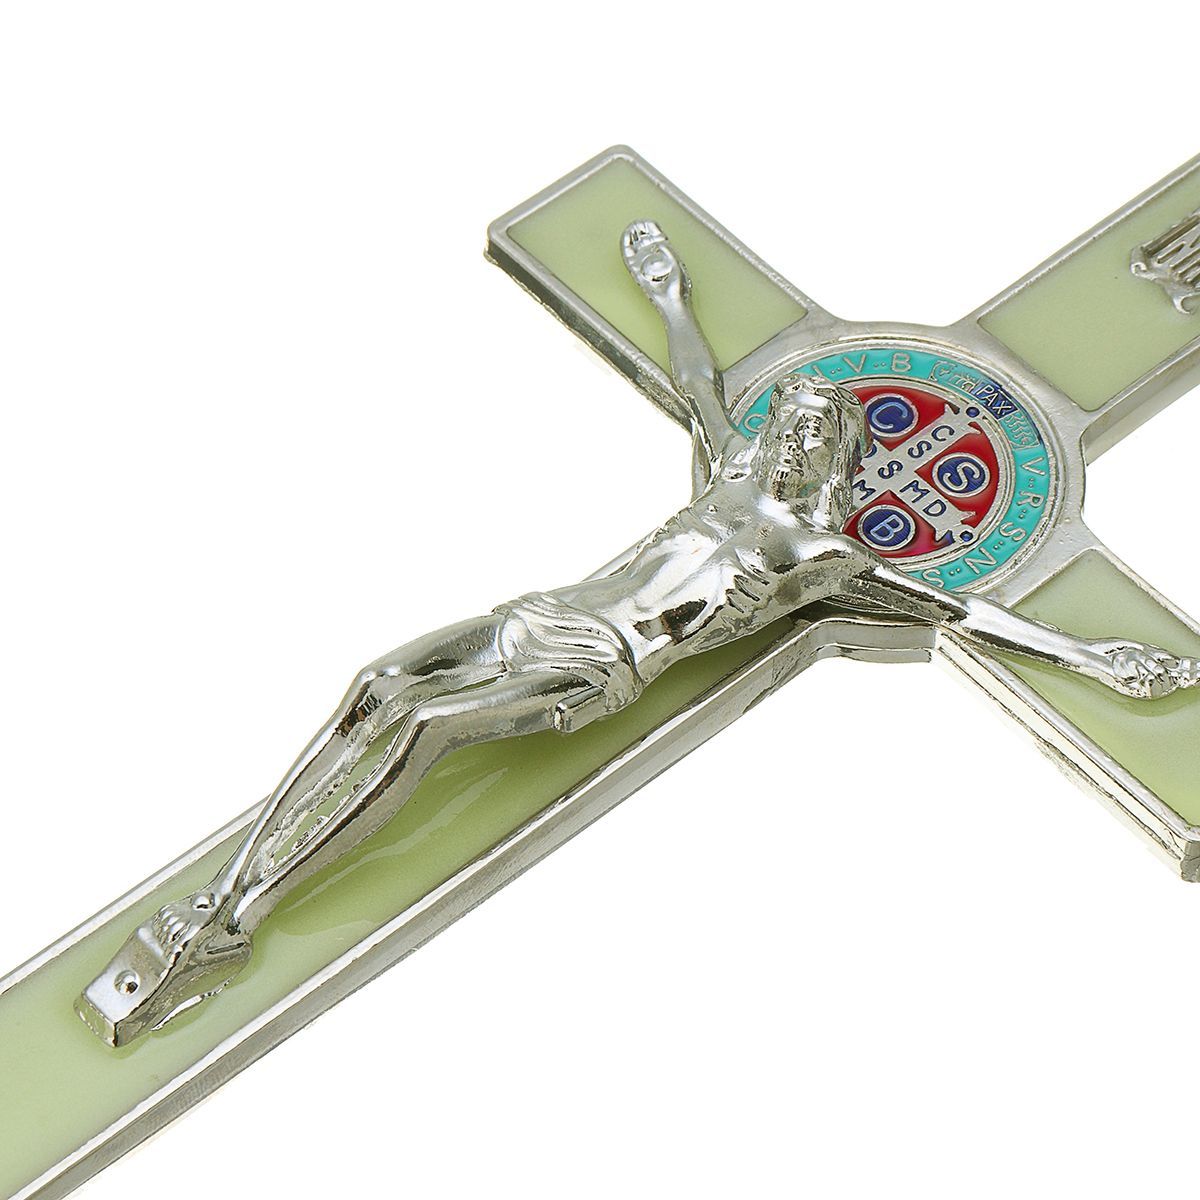 7-Antique-Green-Catholic-Religious-Wall-Cross-Jesus-Crucifix-Decorations-Noctilucent-1499289